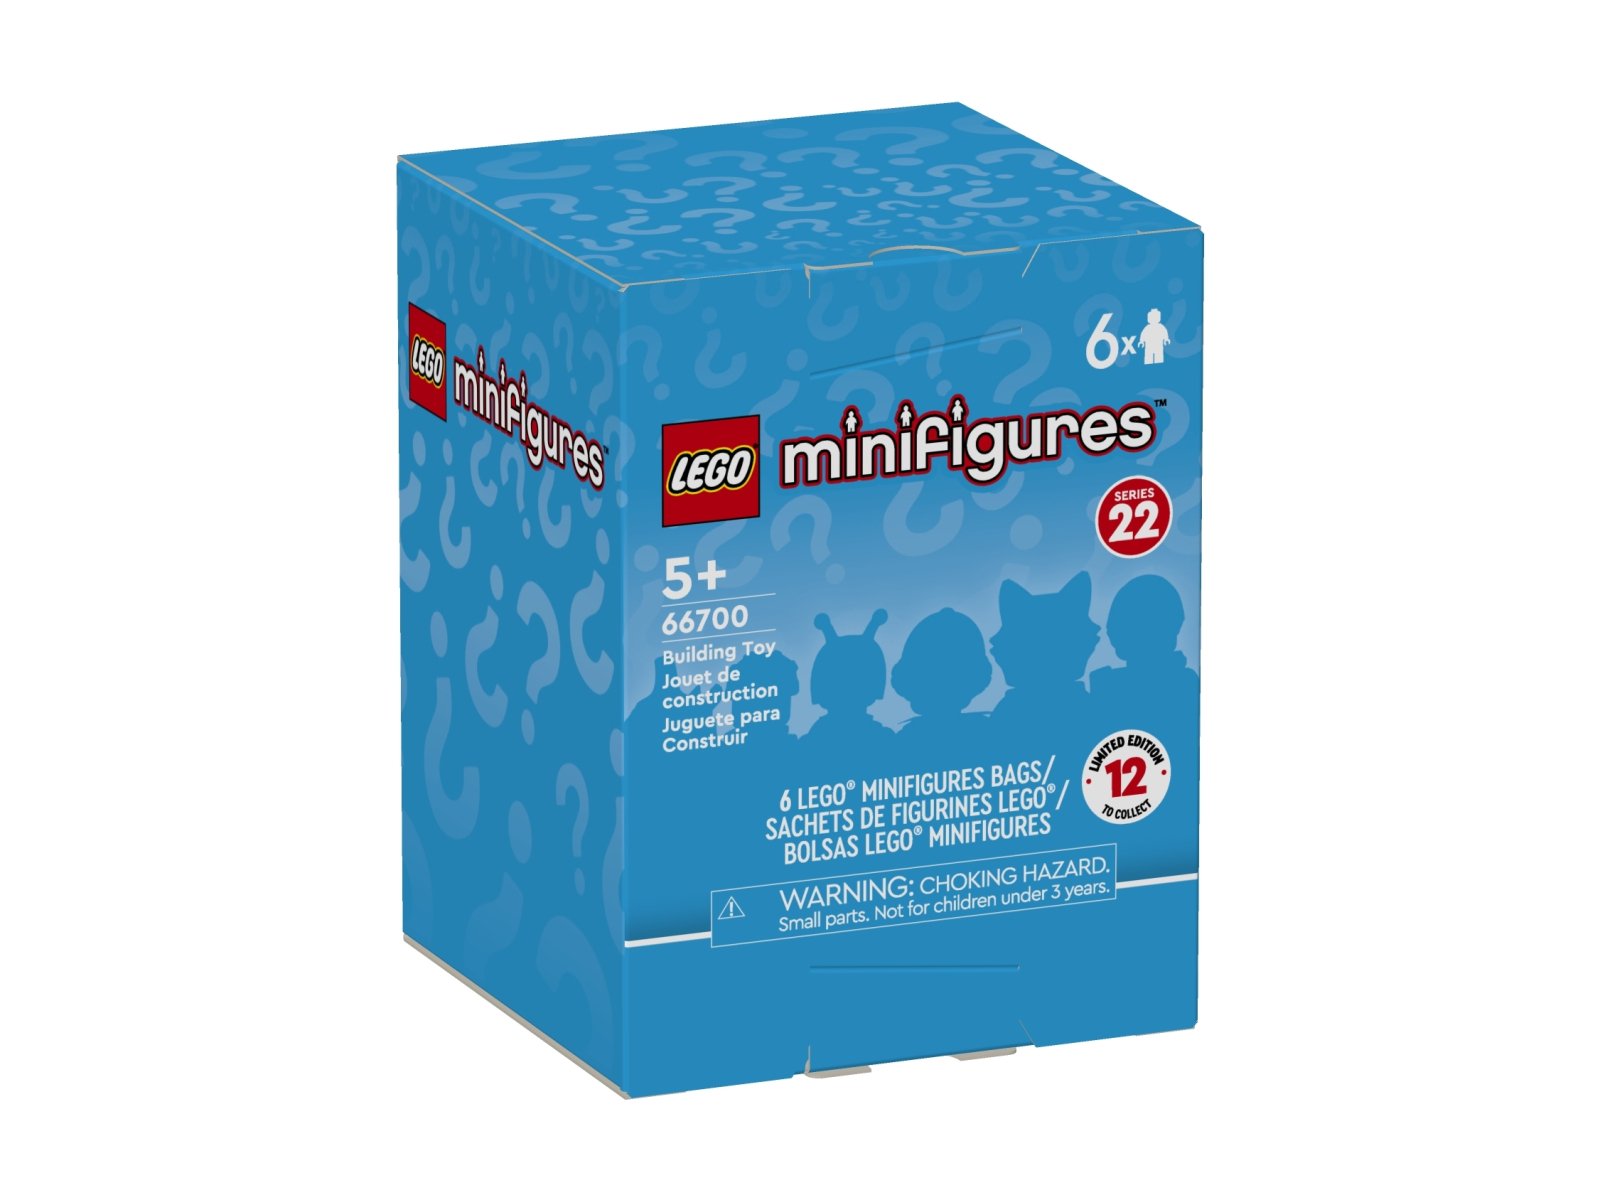 LEGO Minifigures 66700 Sześciopak minifigurek z serii 22